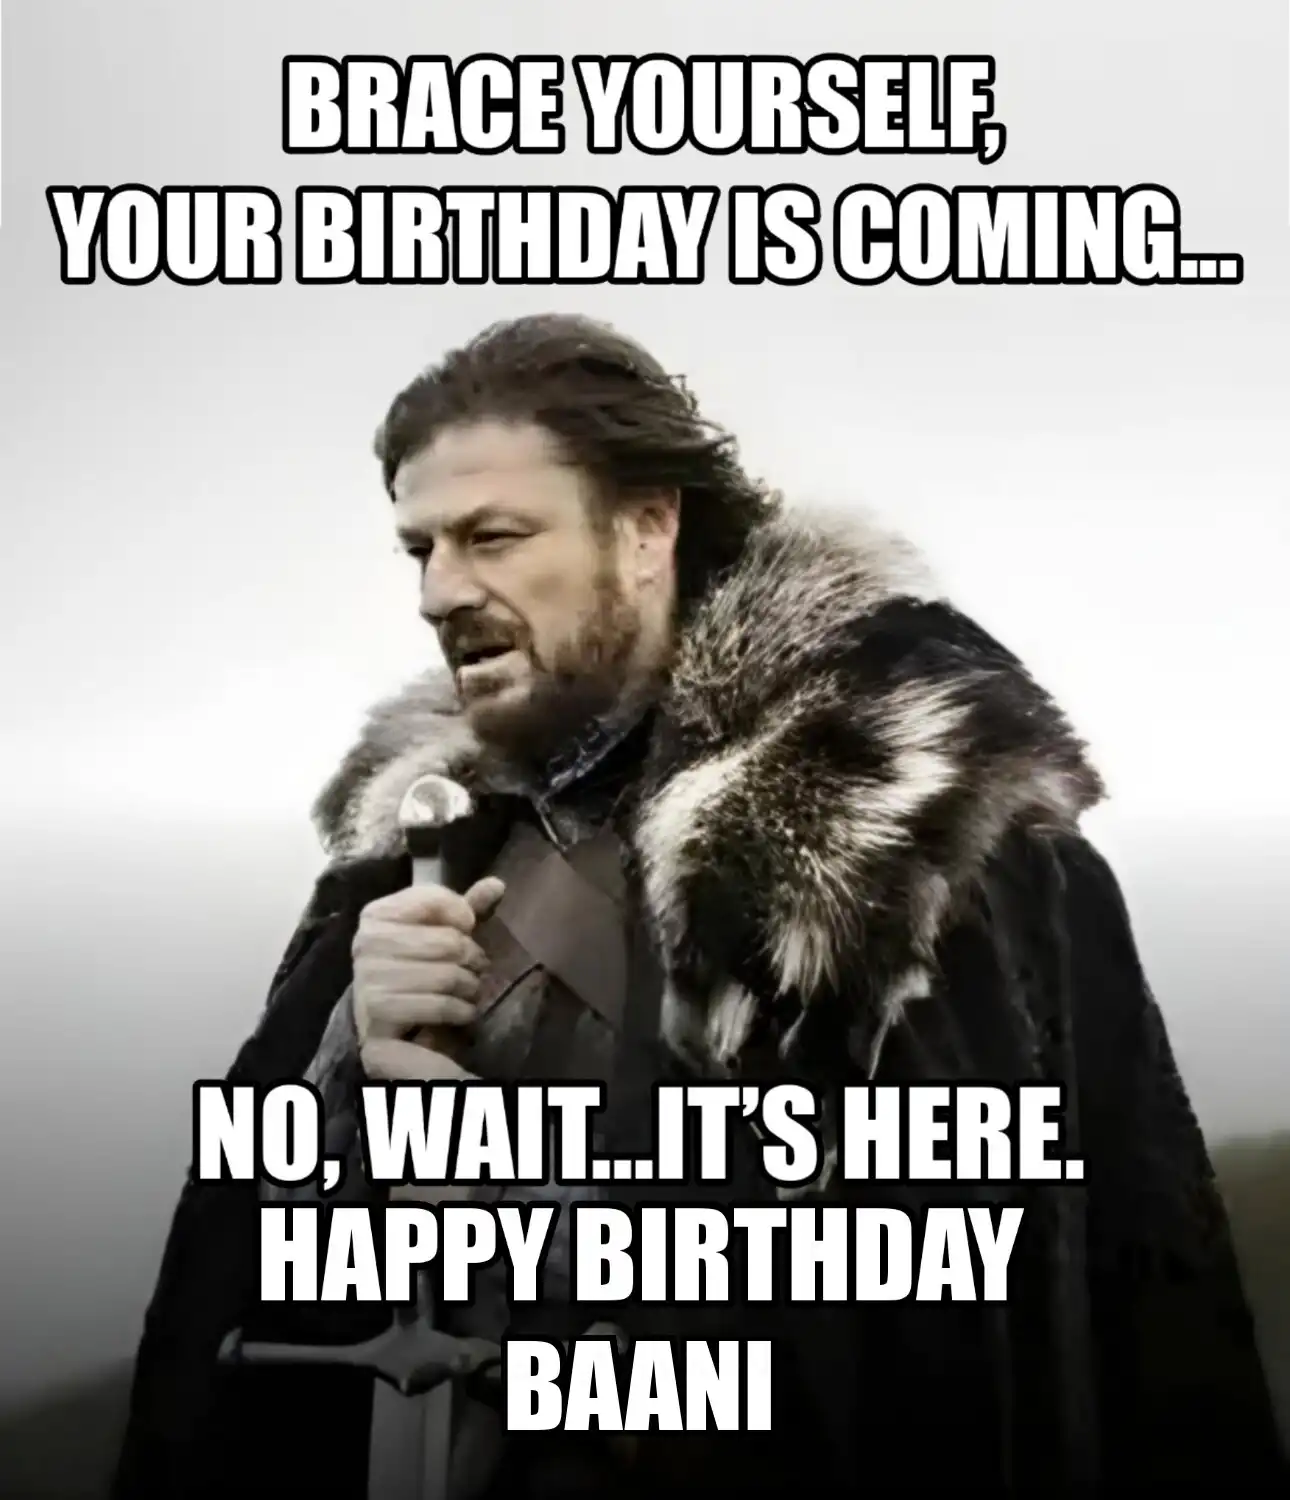 Happy Birthday Baani Brace Yourself Your Birthday Is Coming Meme